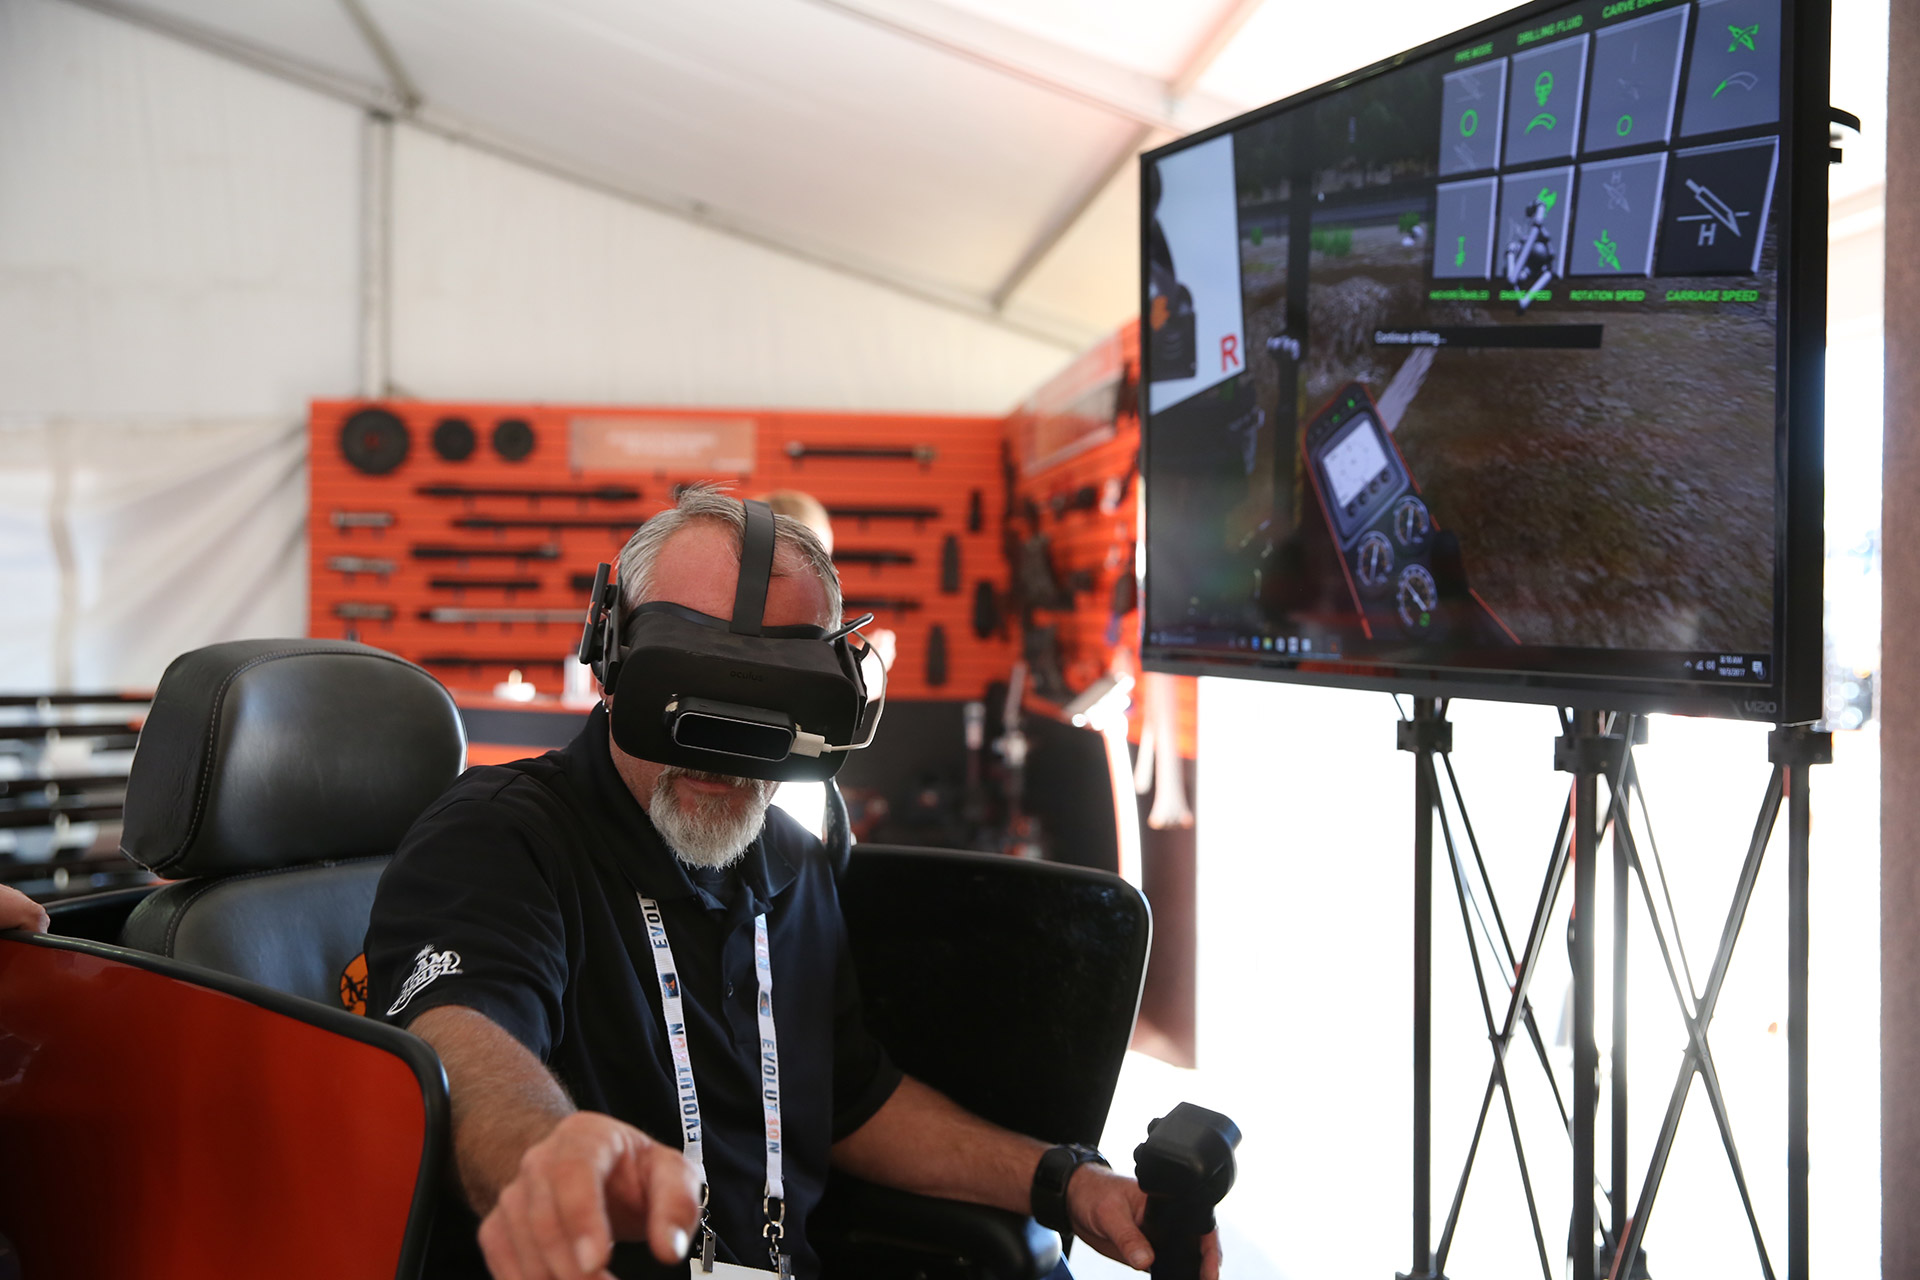 Power Wash Simulator VR Looks Set To Overcome The Pressure